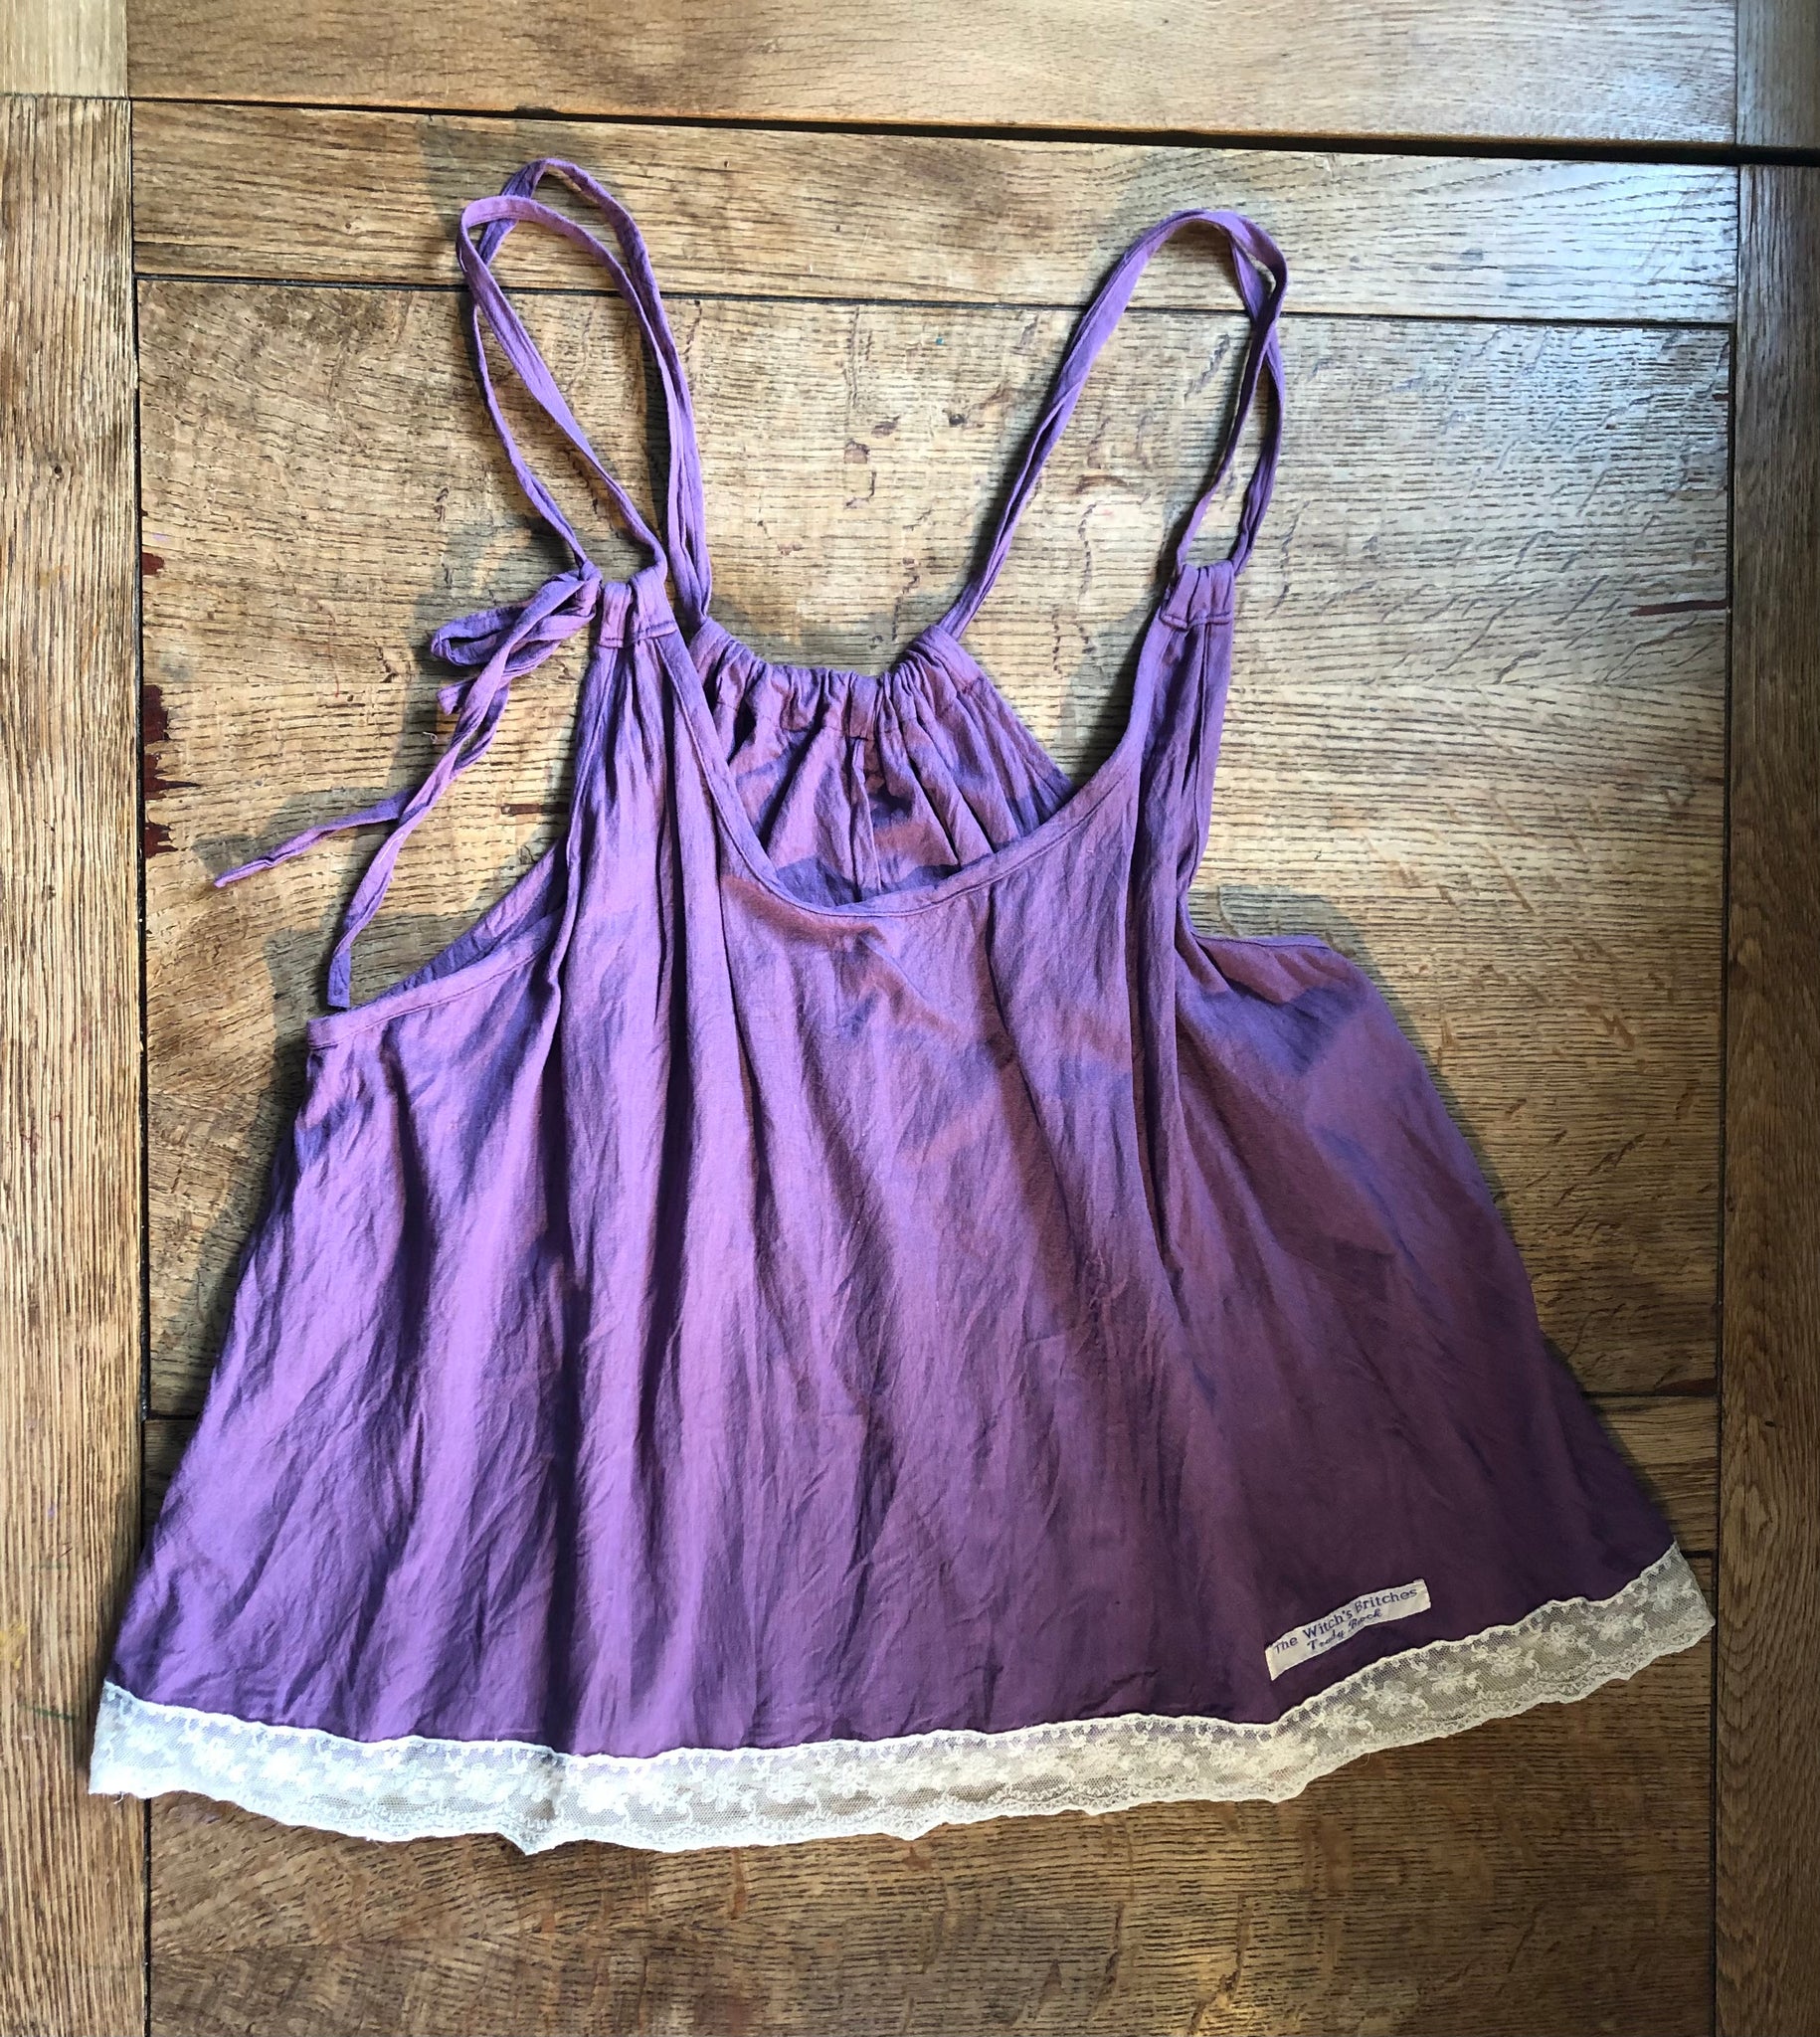 Grape organic fairtrade cotton women’s camisole top (46” bust)